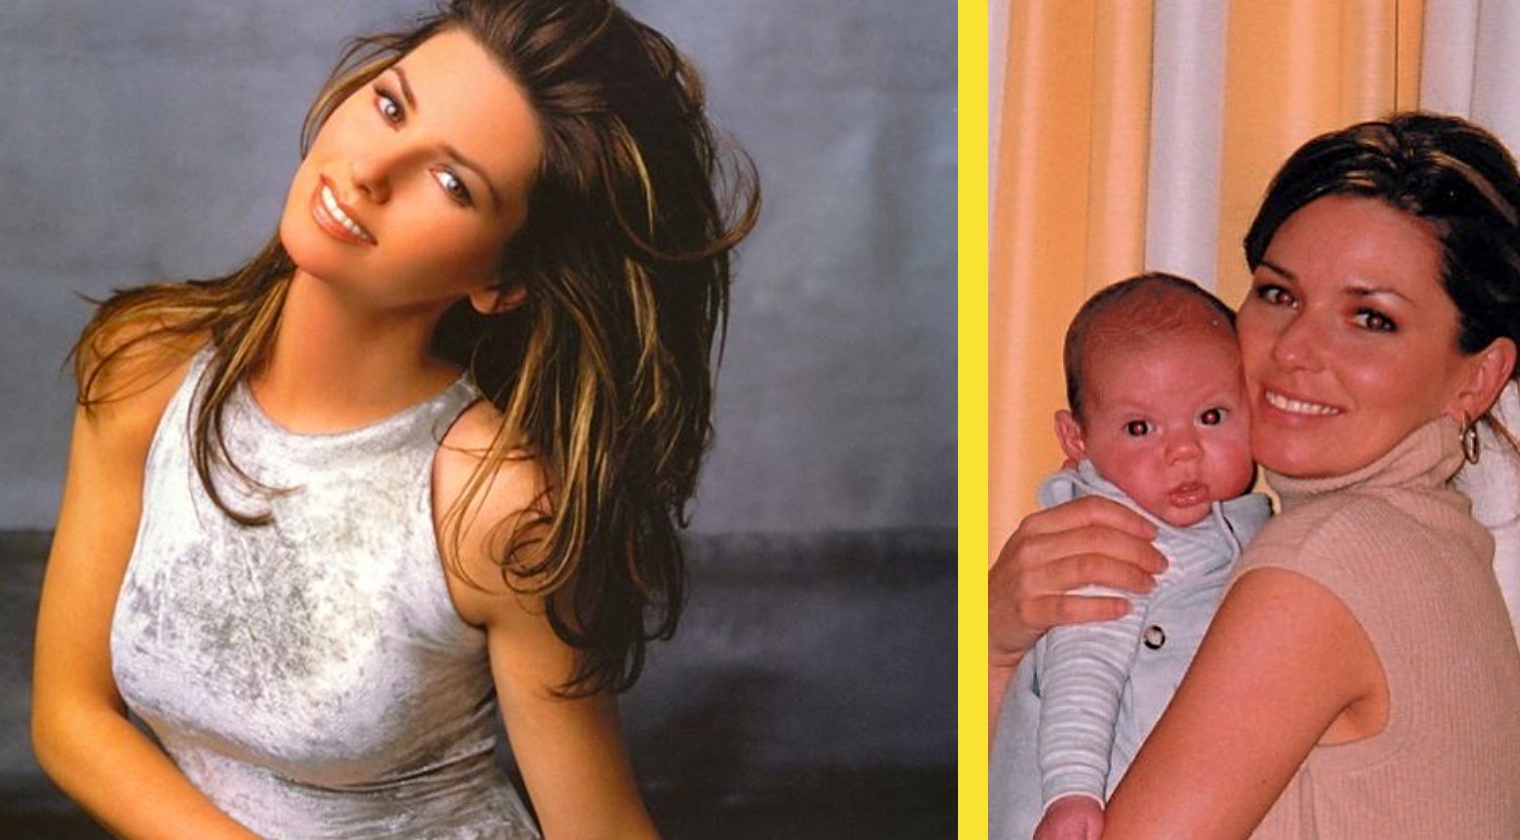 Shania Twain Only Has 1 Son, Meet Him In 3 Baby Photos